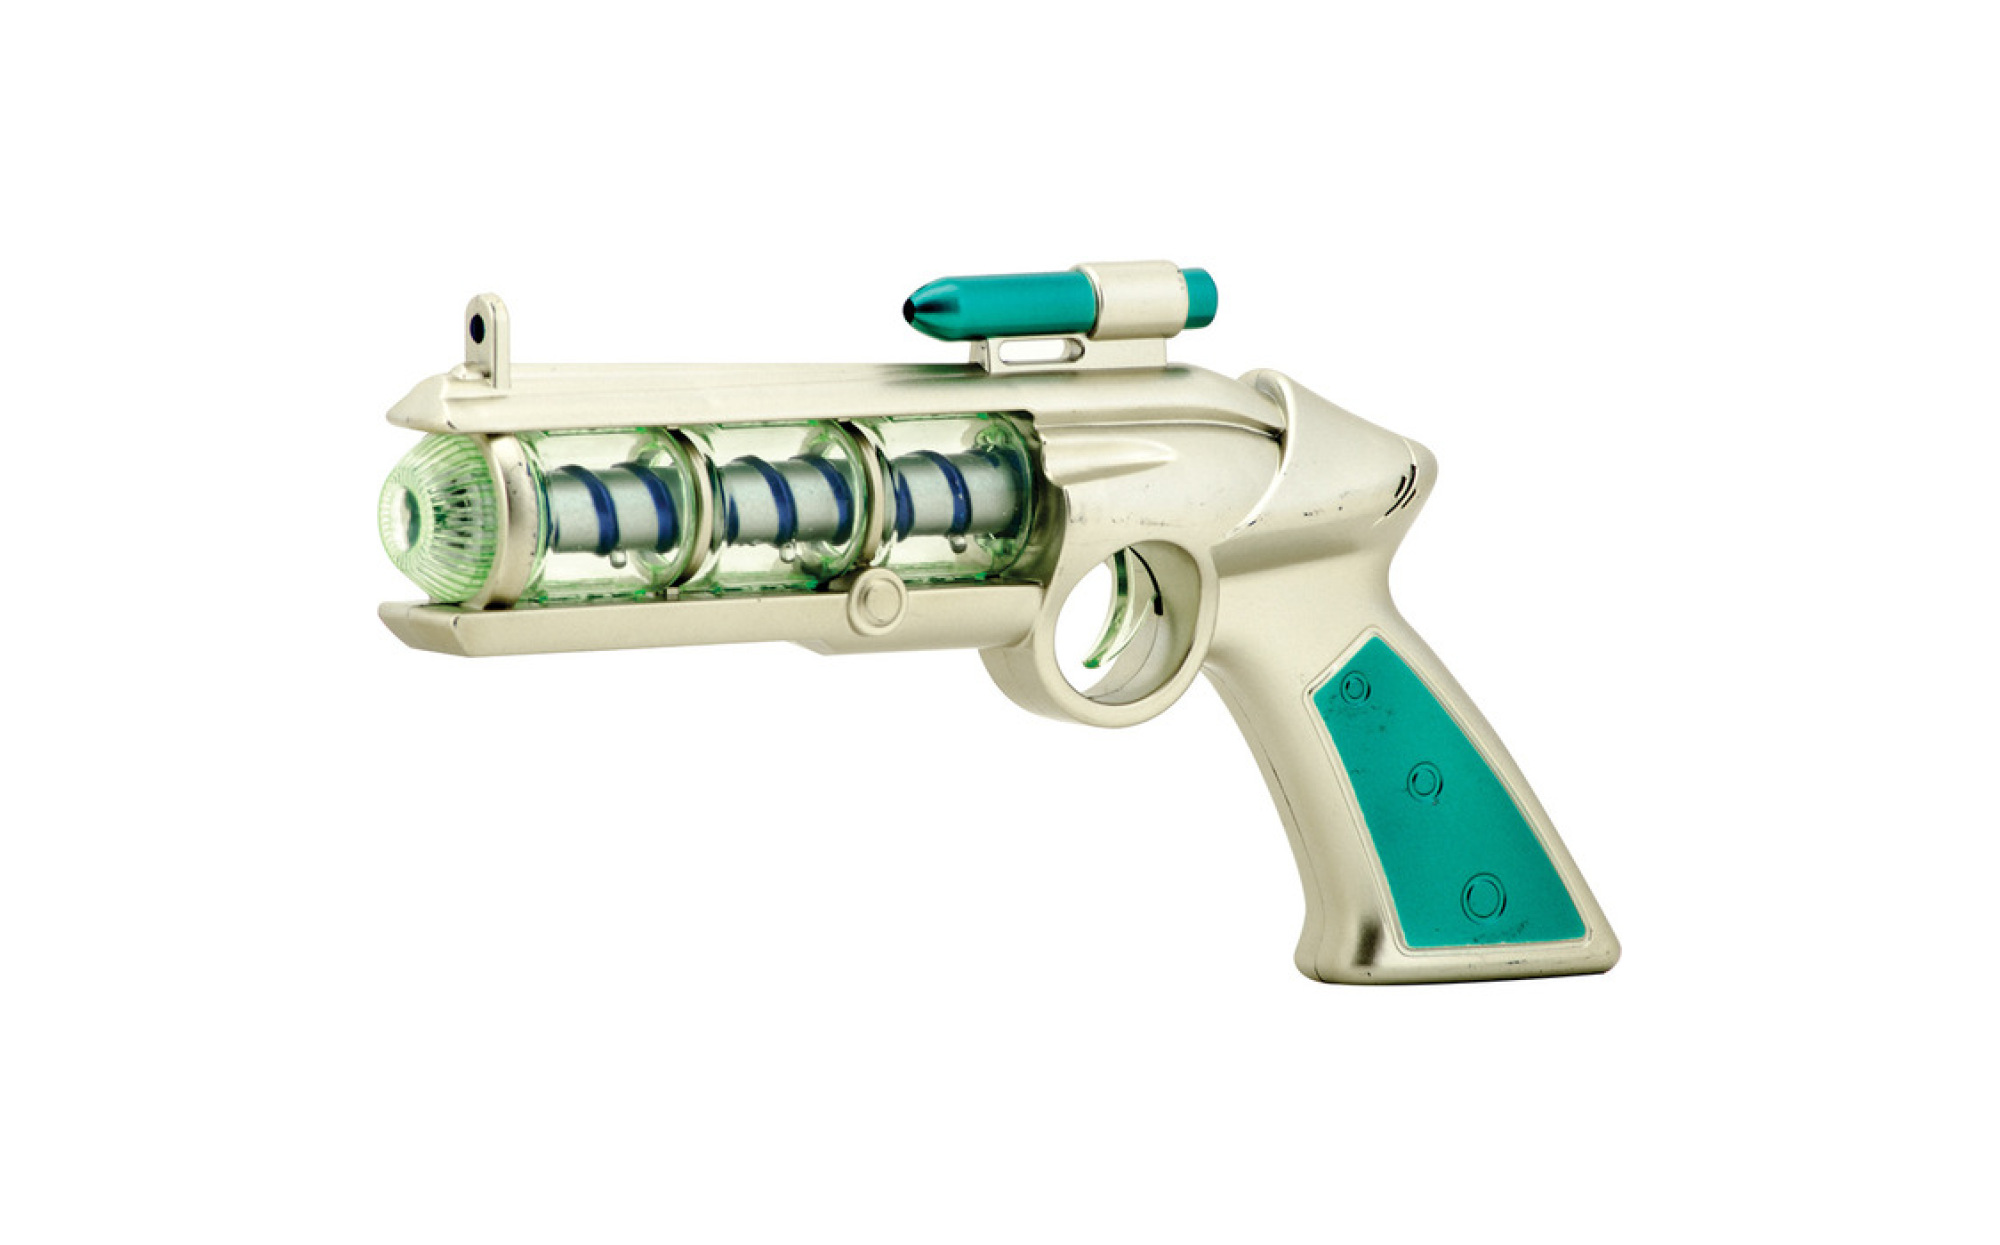 Small Dart Gun: Nanofire – Play Therapy Toys: Aggression Play